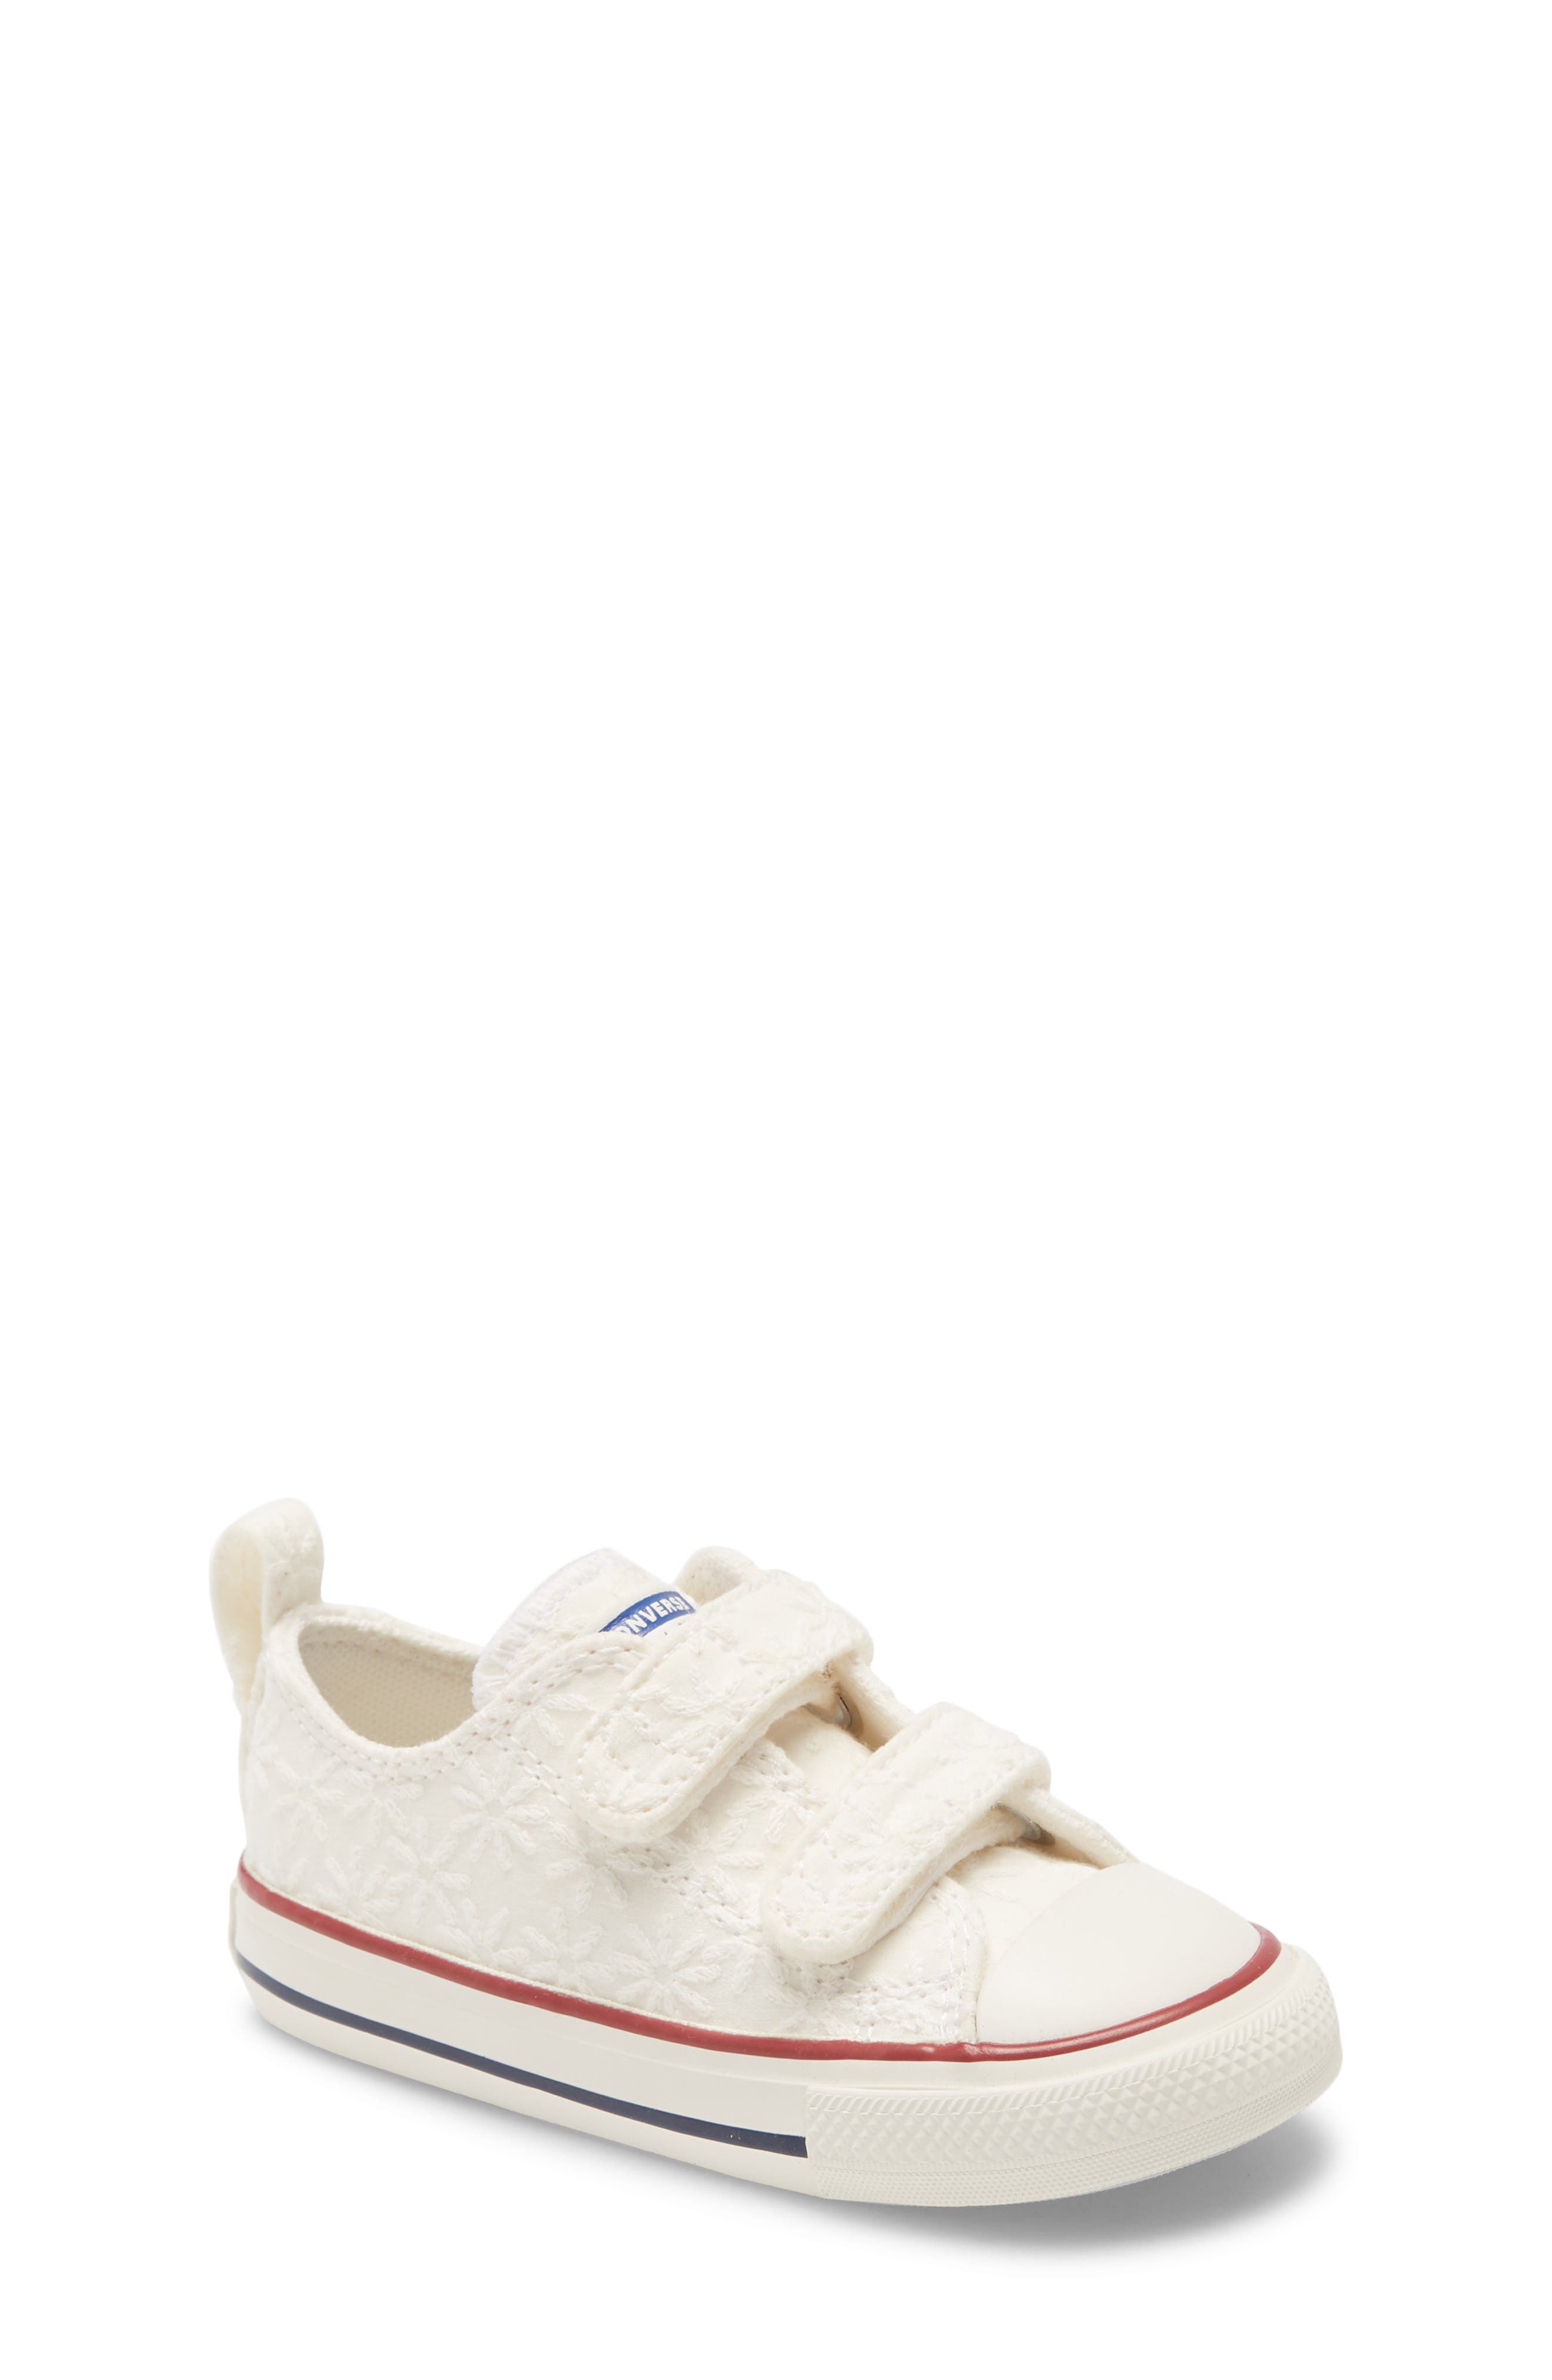 converse chuck taylor toddler shoes